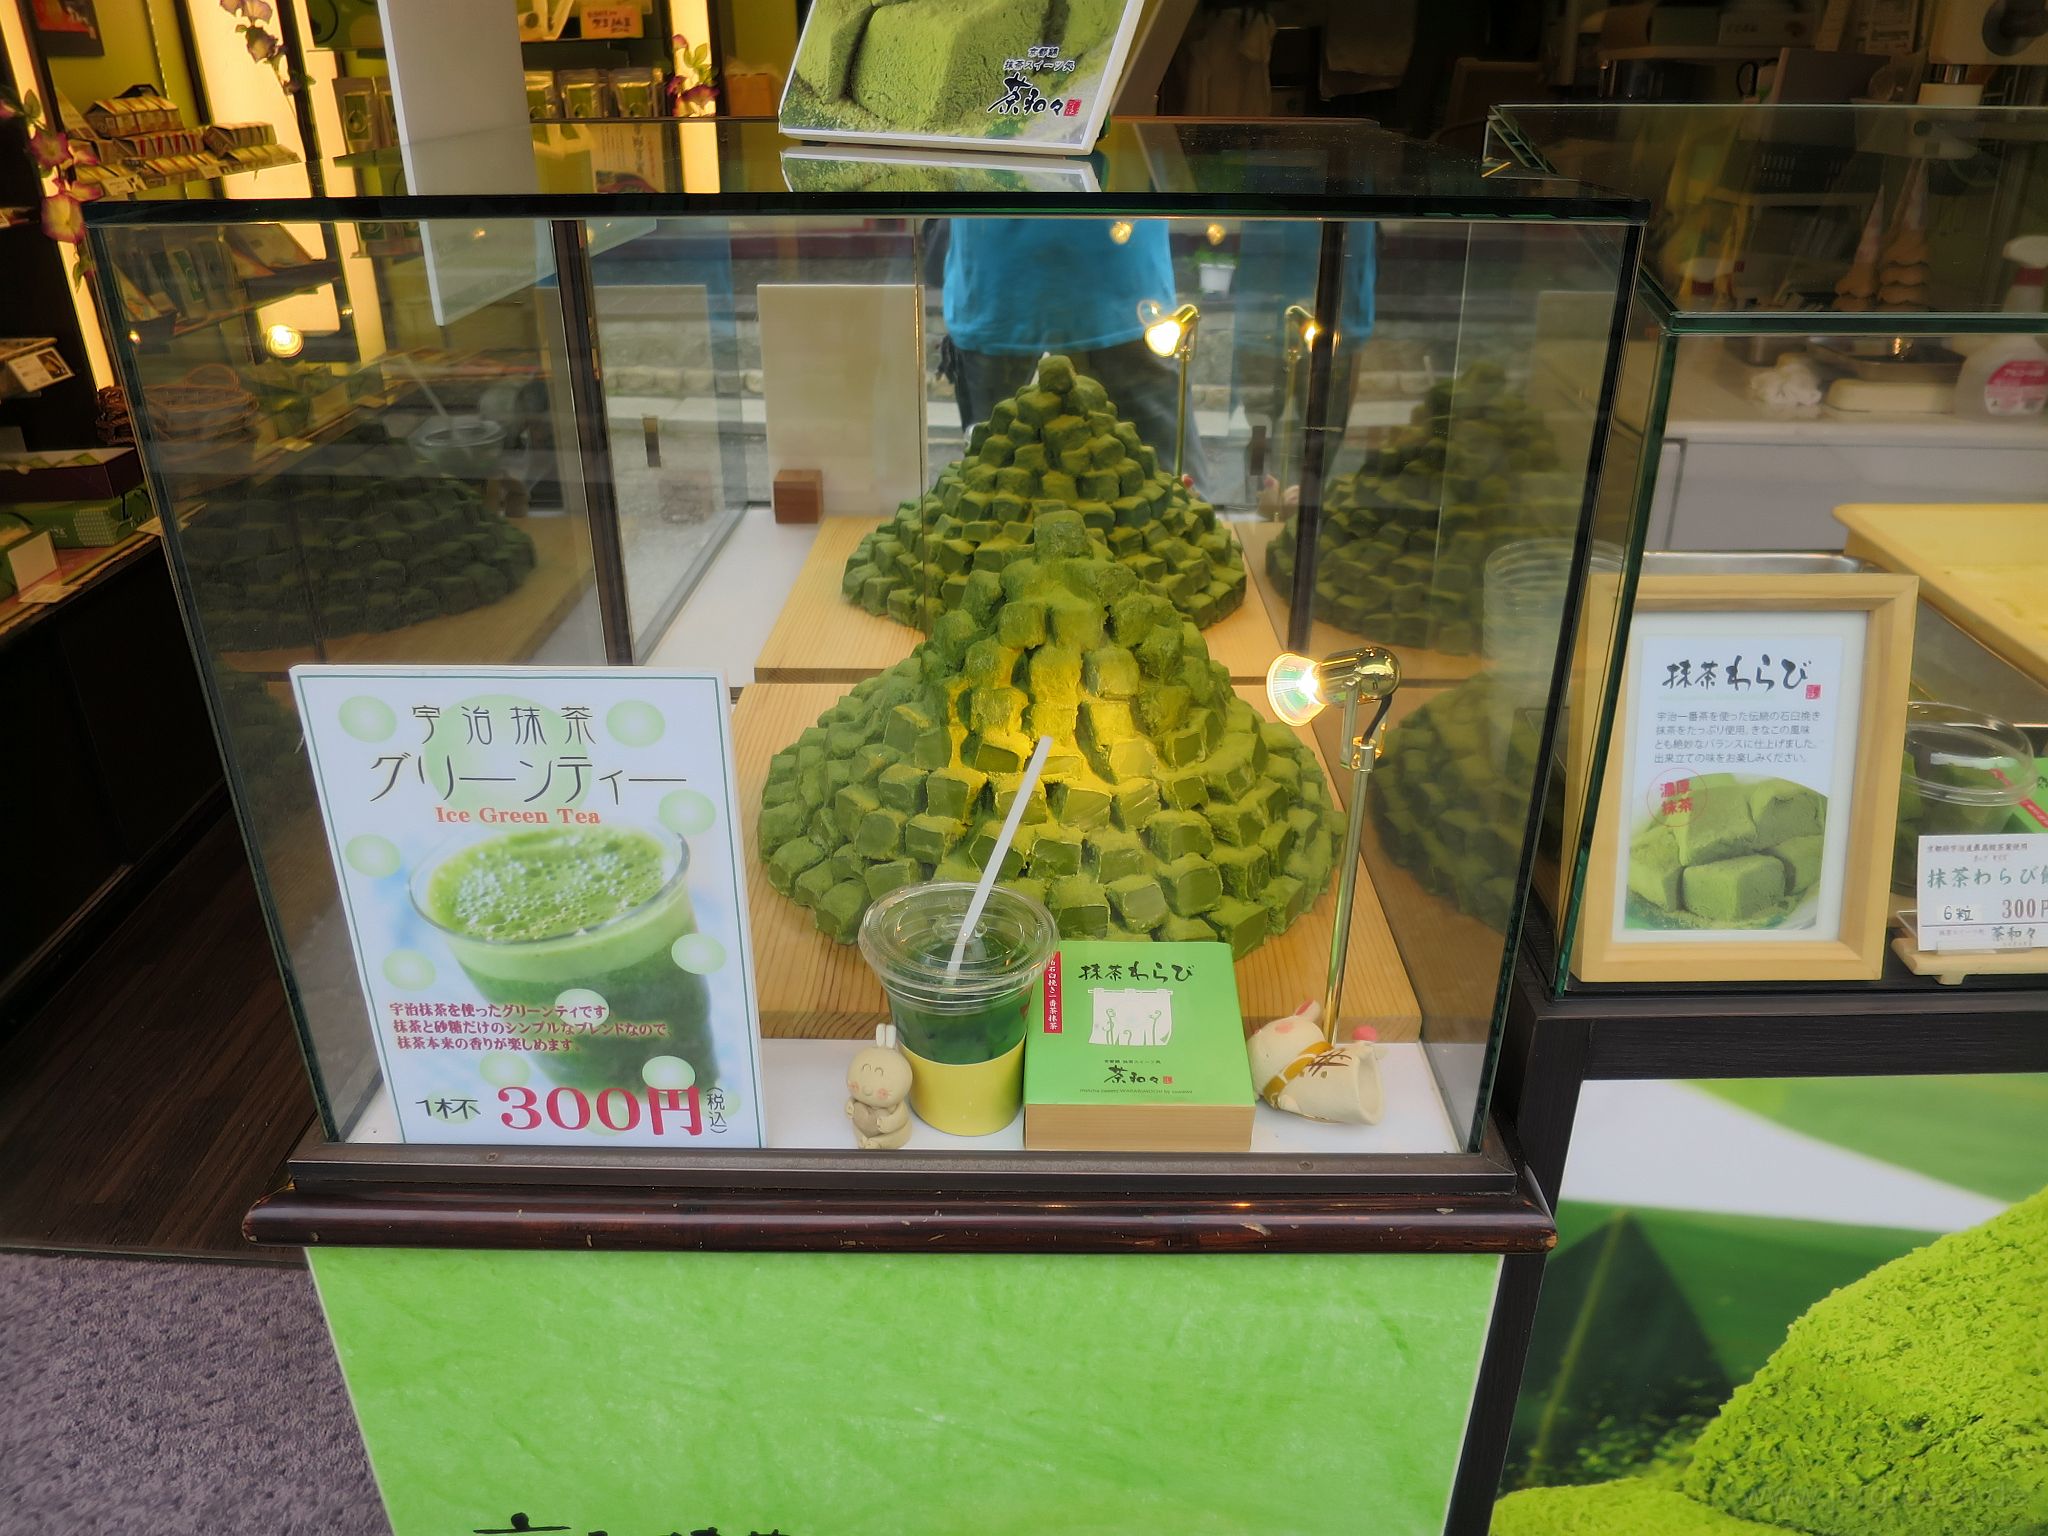 20140628-gruenteedinge.jpg - Grünteewürfel, Kyoto - 京都市